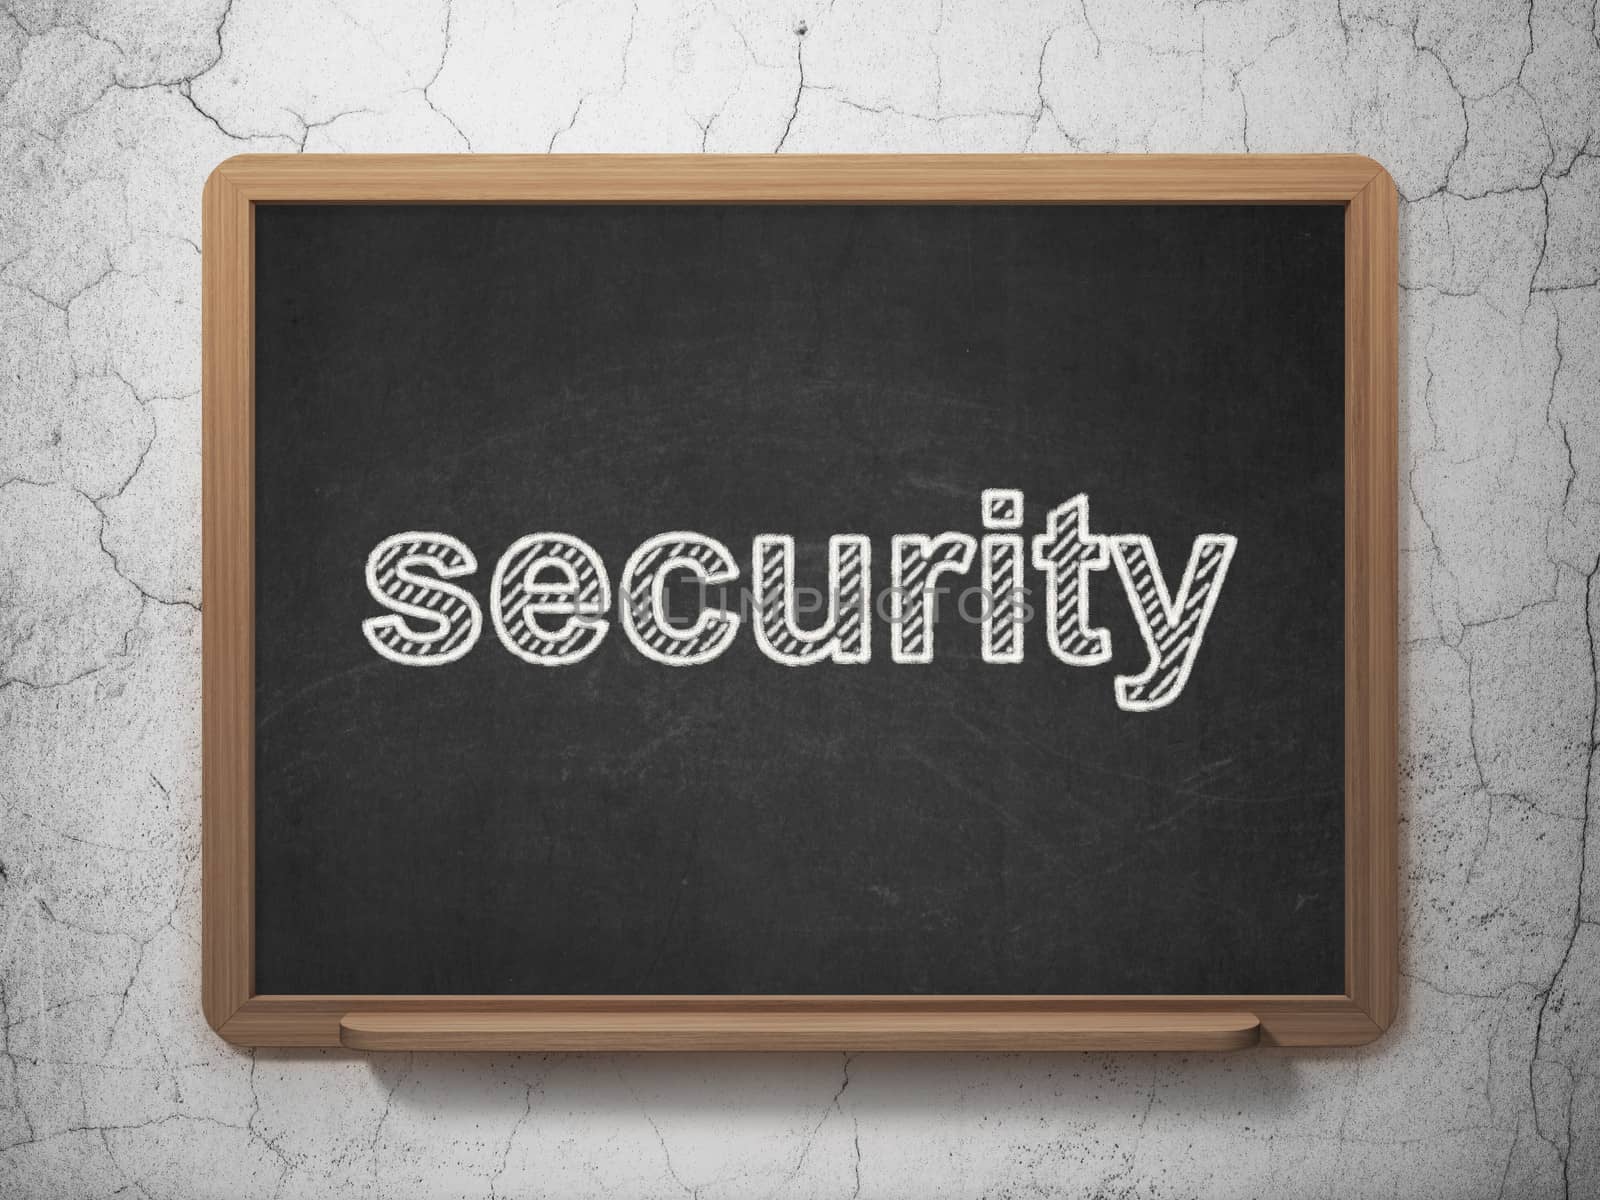 Privacy concept: Security on chalkboard background by maxkabakov